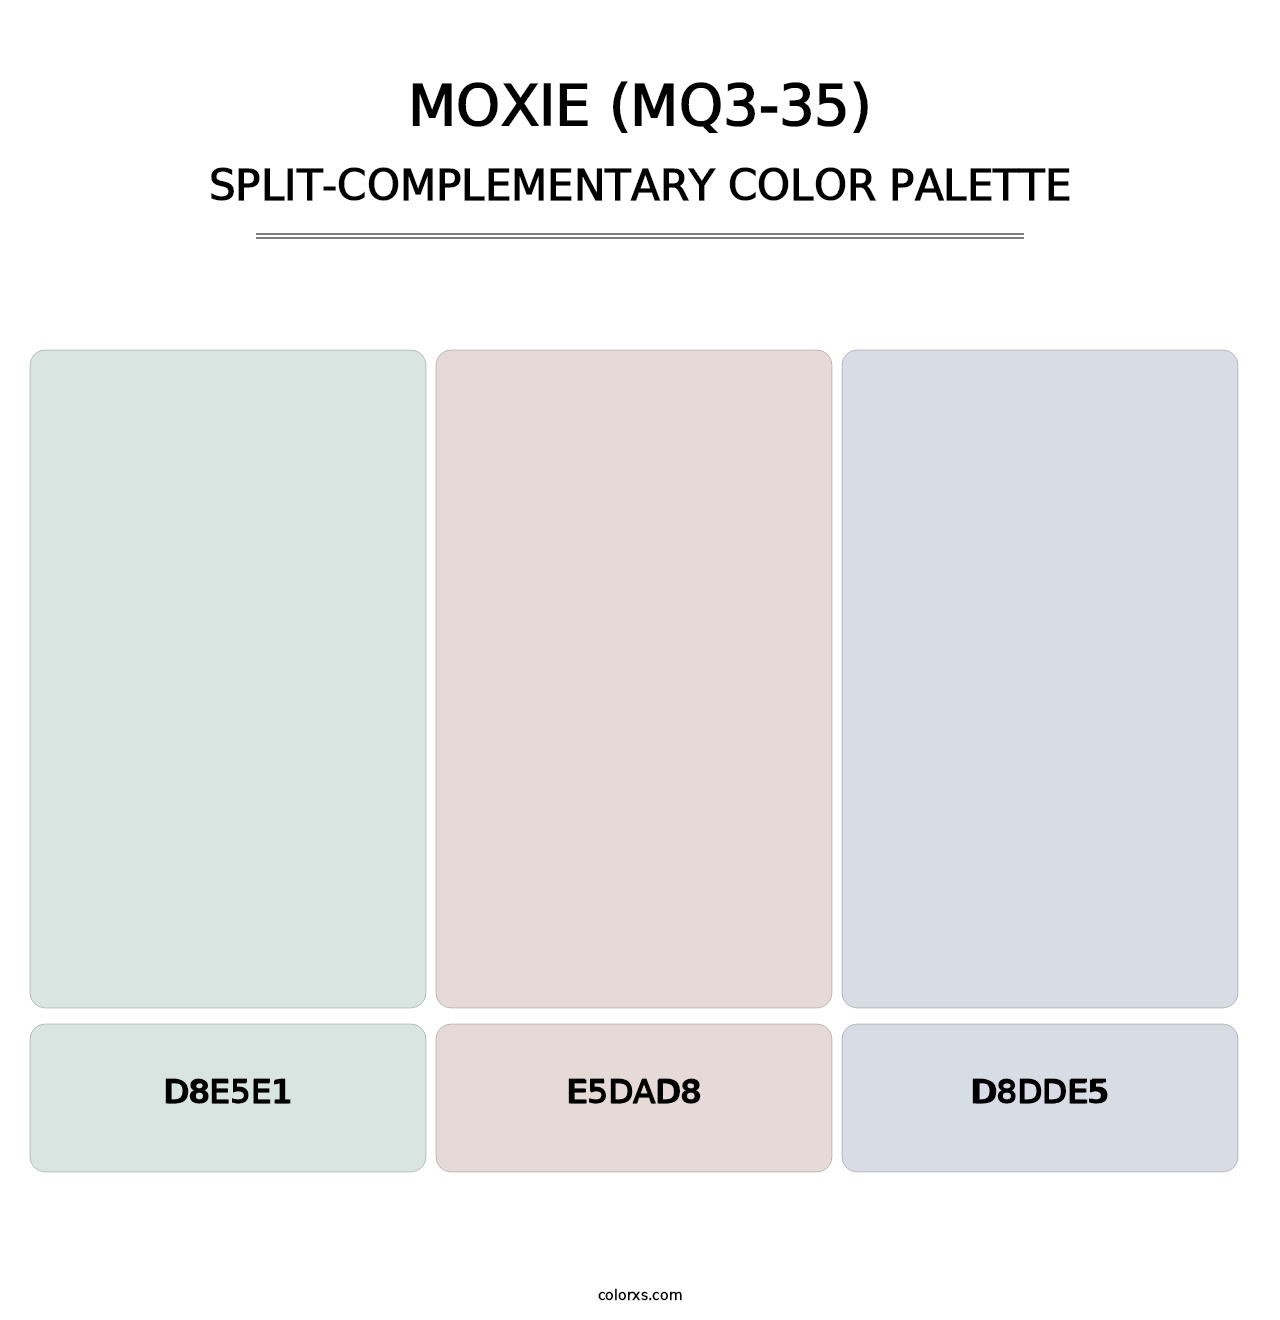 Moxie (MQ3-35) - Split-Complementary Color Palette